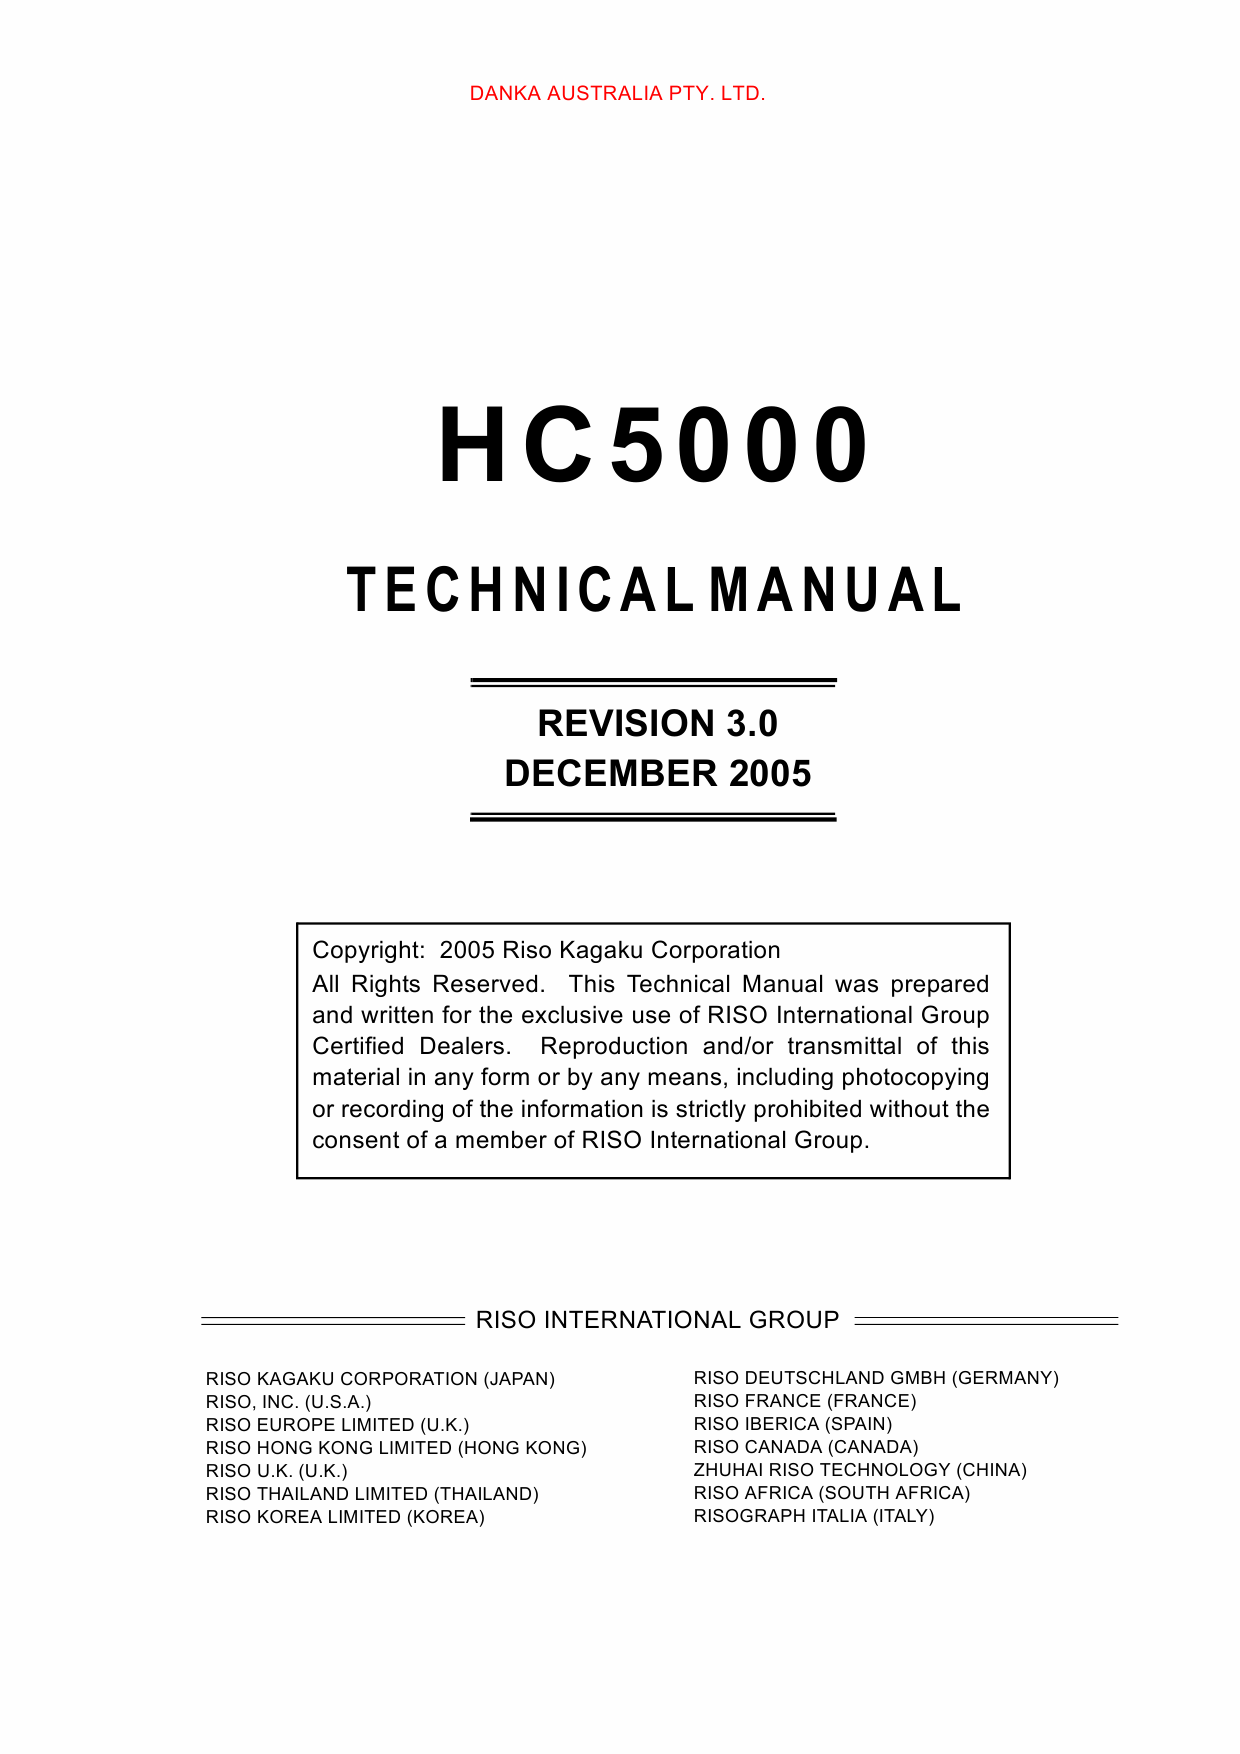 RISO HC 5000 TECHNICAL Service Manual-1